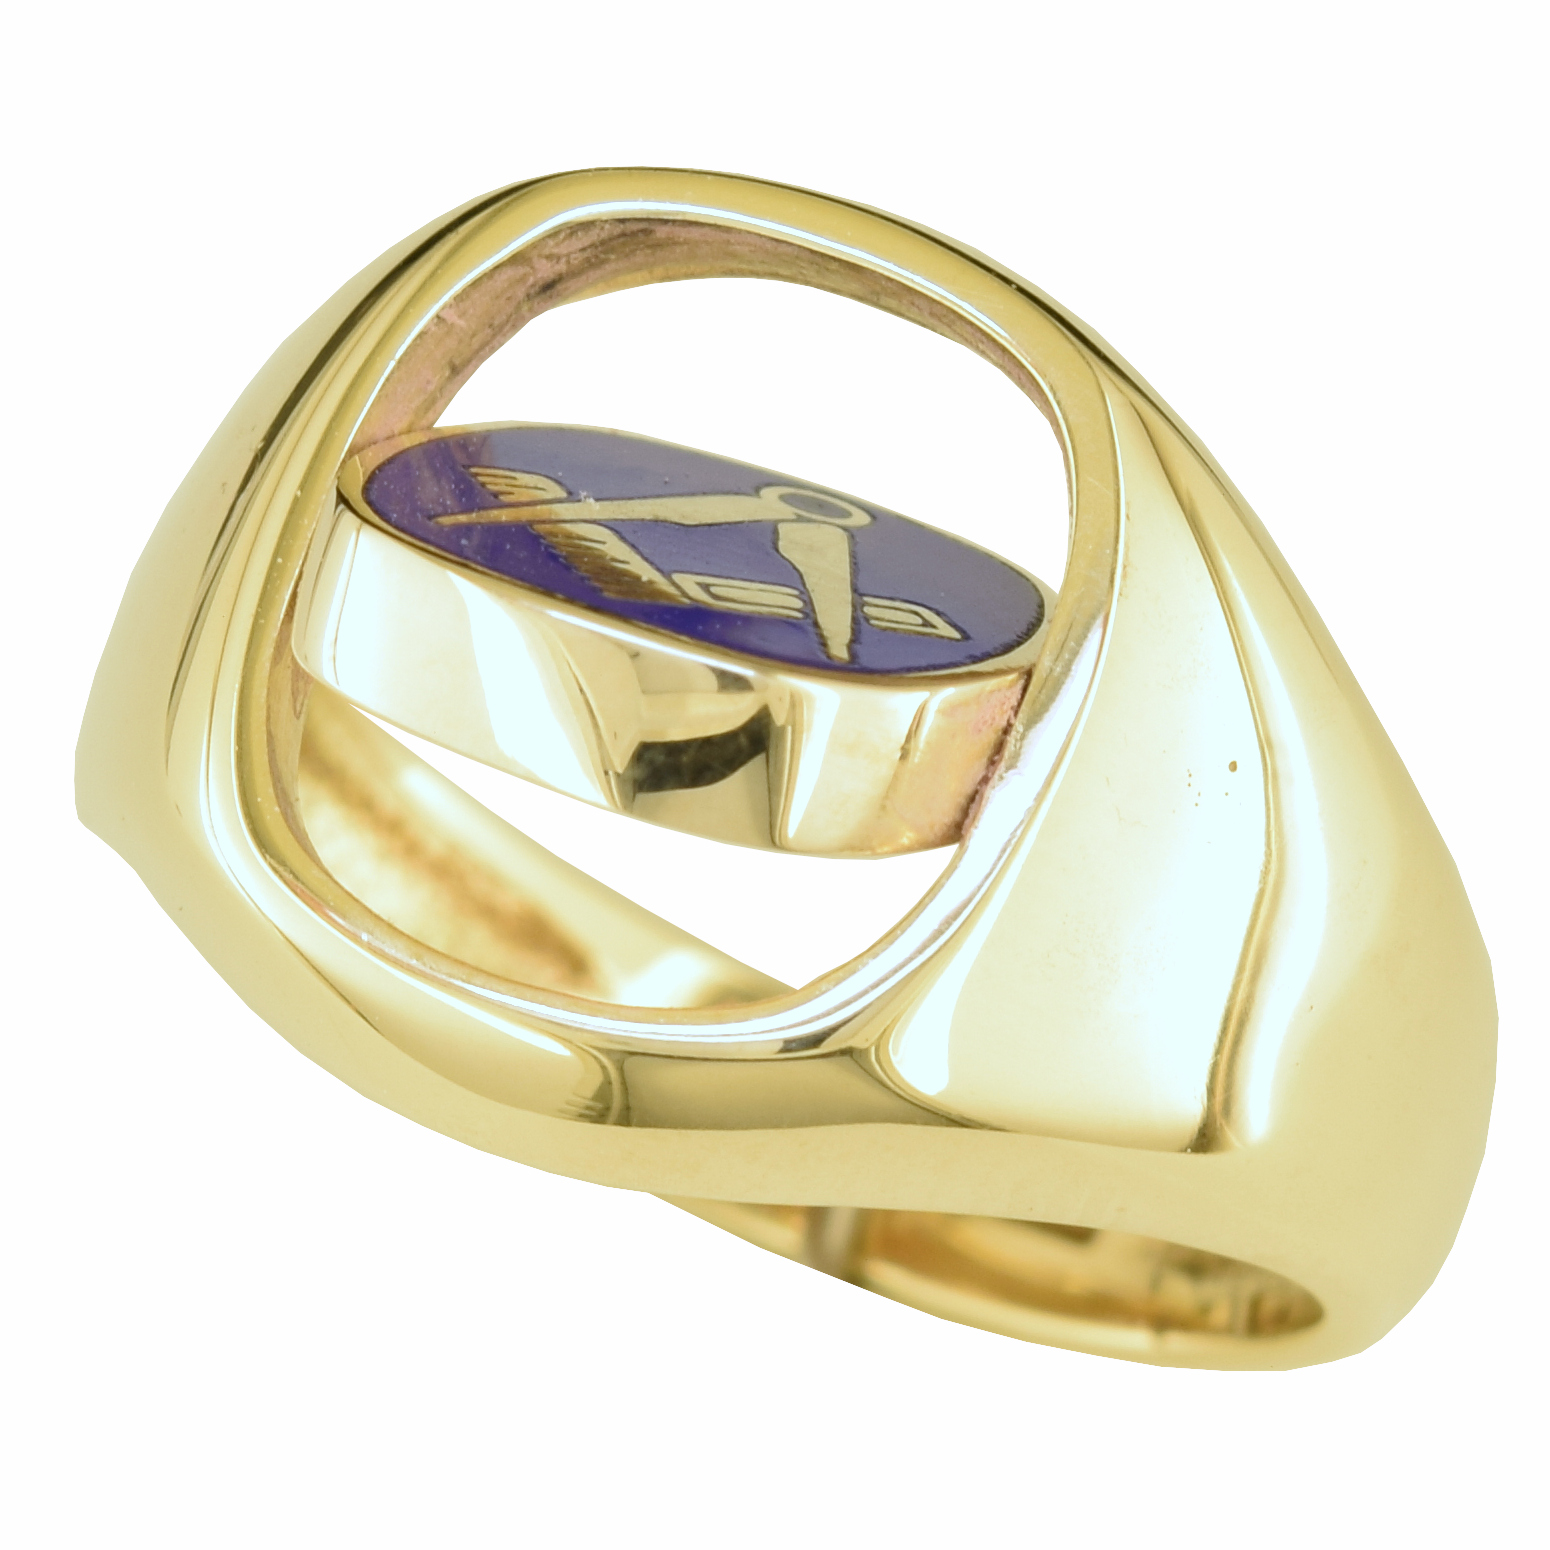 Masonic Rings - Jewellery, Signet Rings, Charms, Earrings